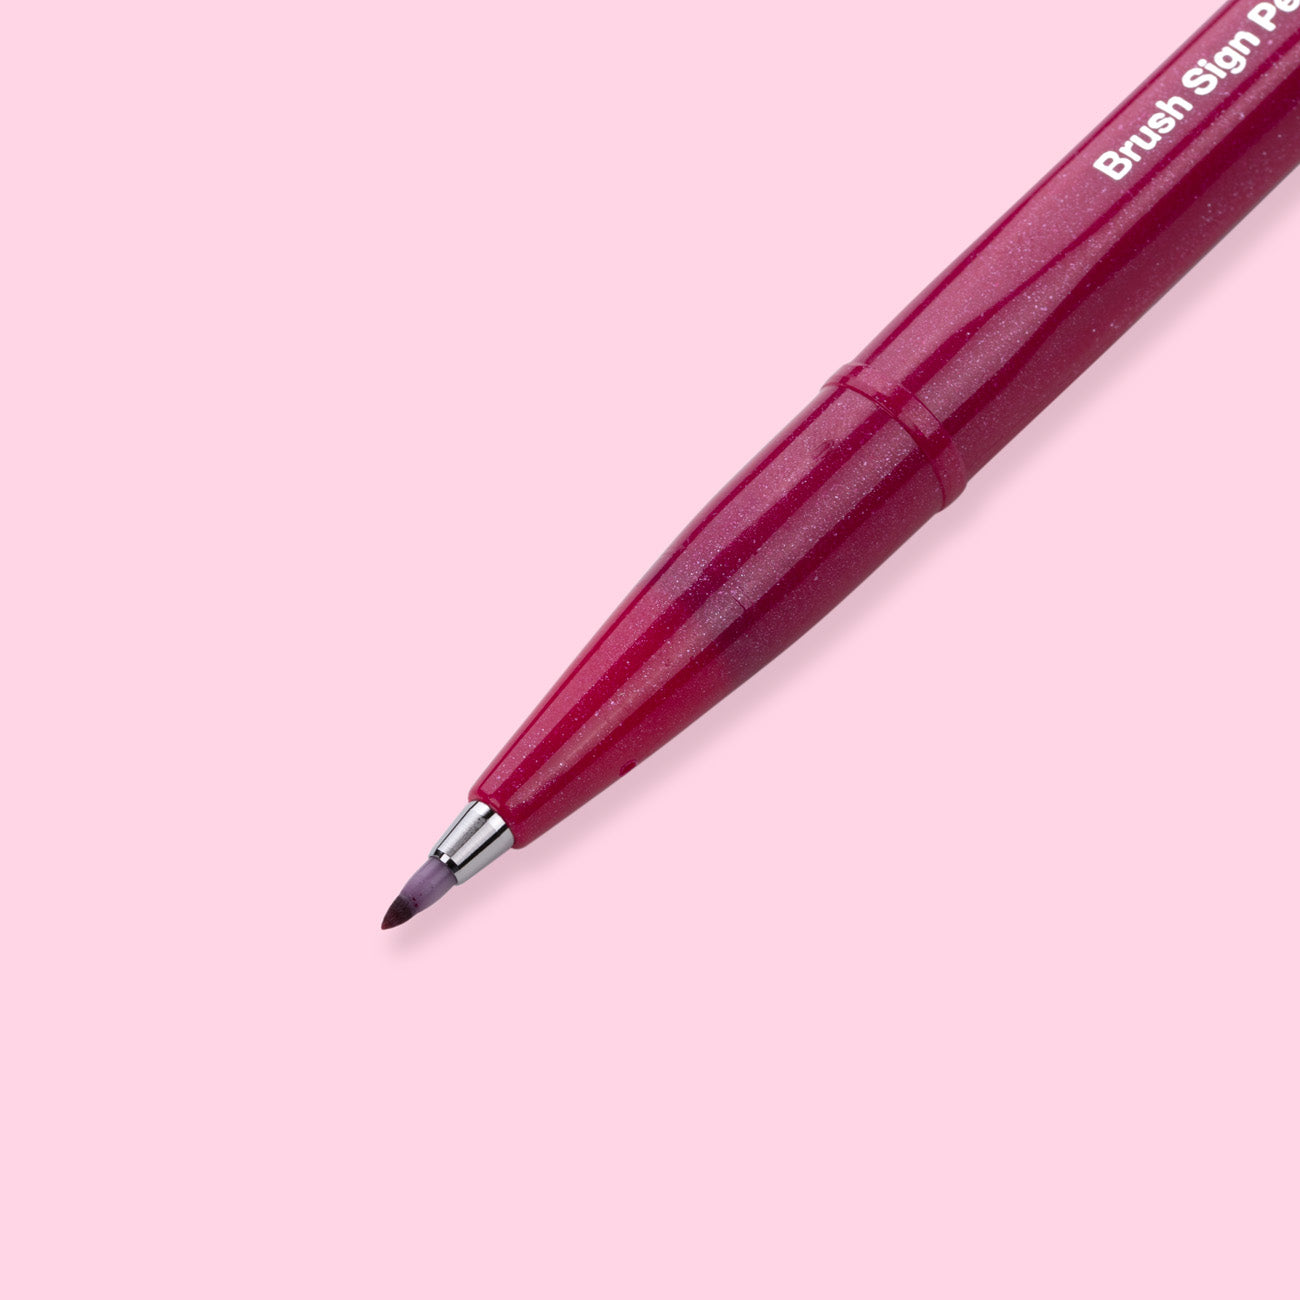 Pentel Fude Touch Brush Sign Pen - Burgundy - 2020 New Colors